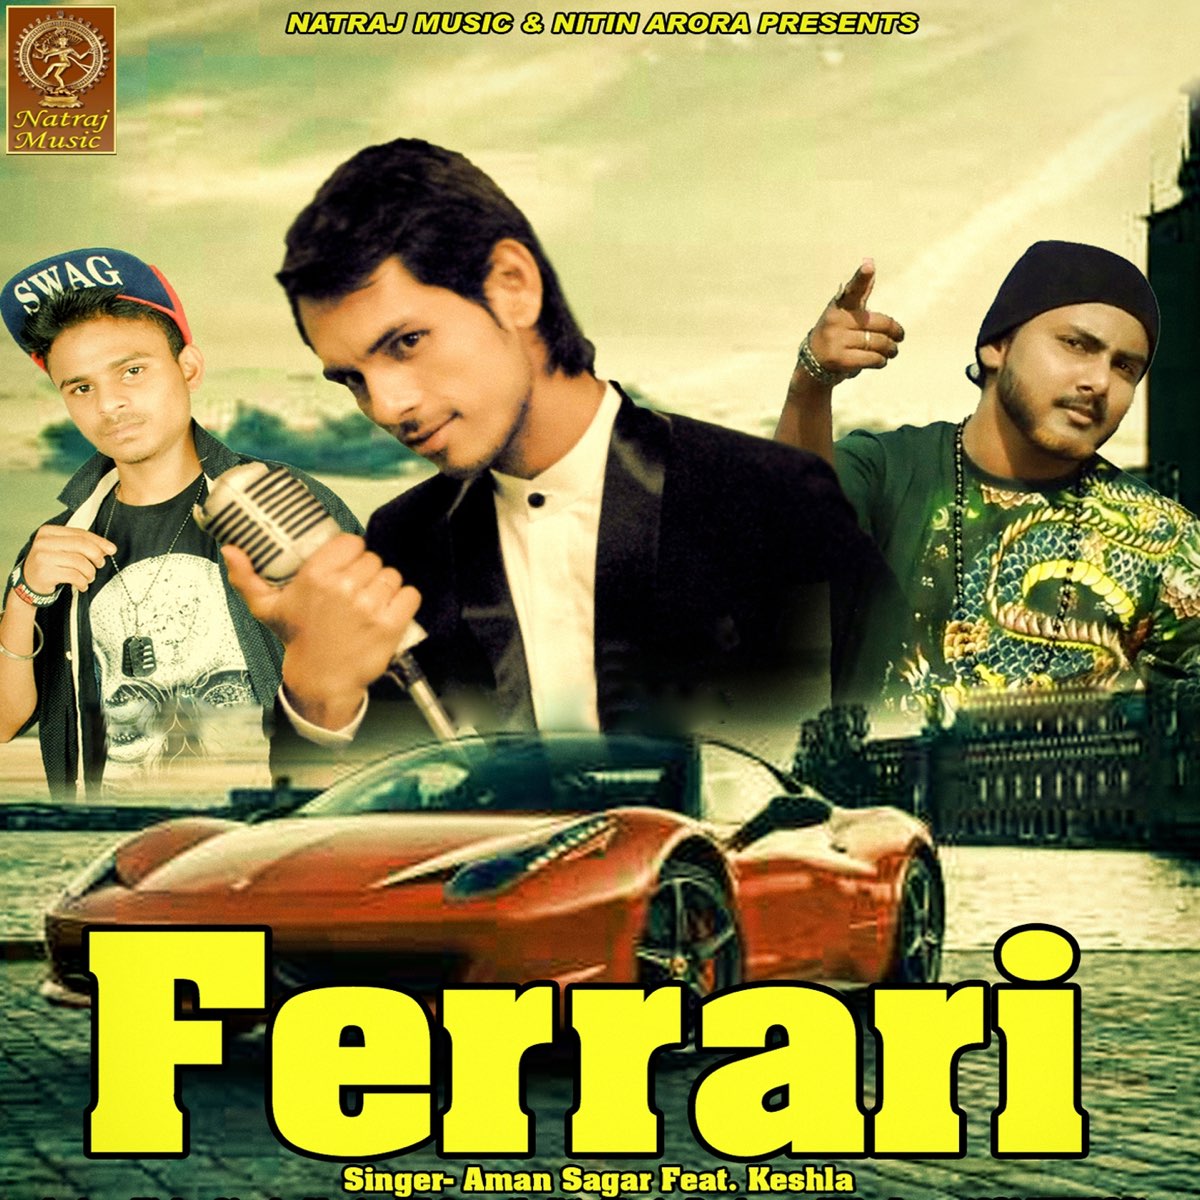 Ferrari feat. Ferrari песня. Альбом Ferrari. Sagar Aman. Песня Ferrari 2000-х.